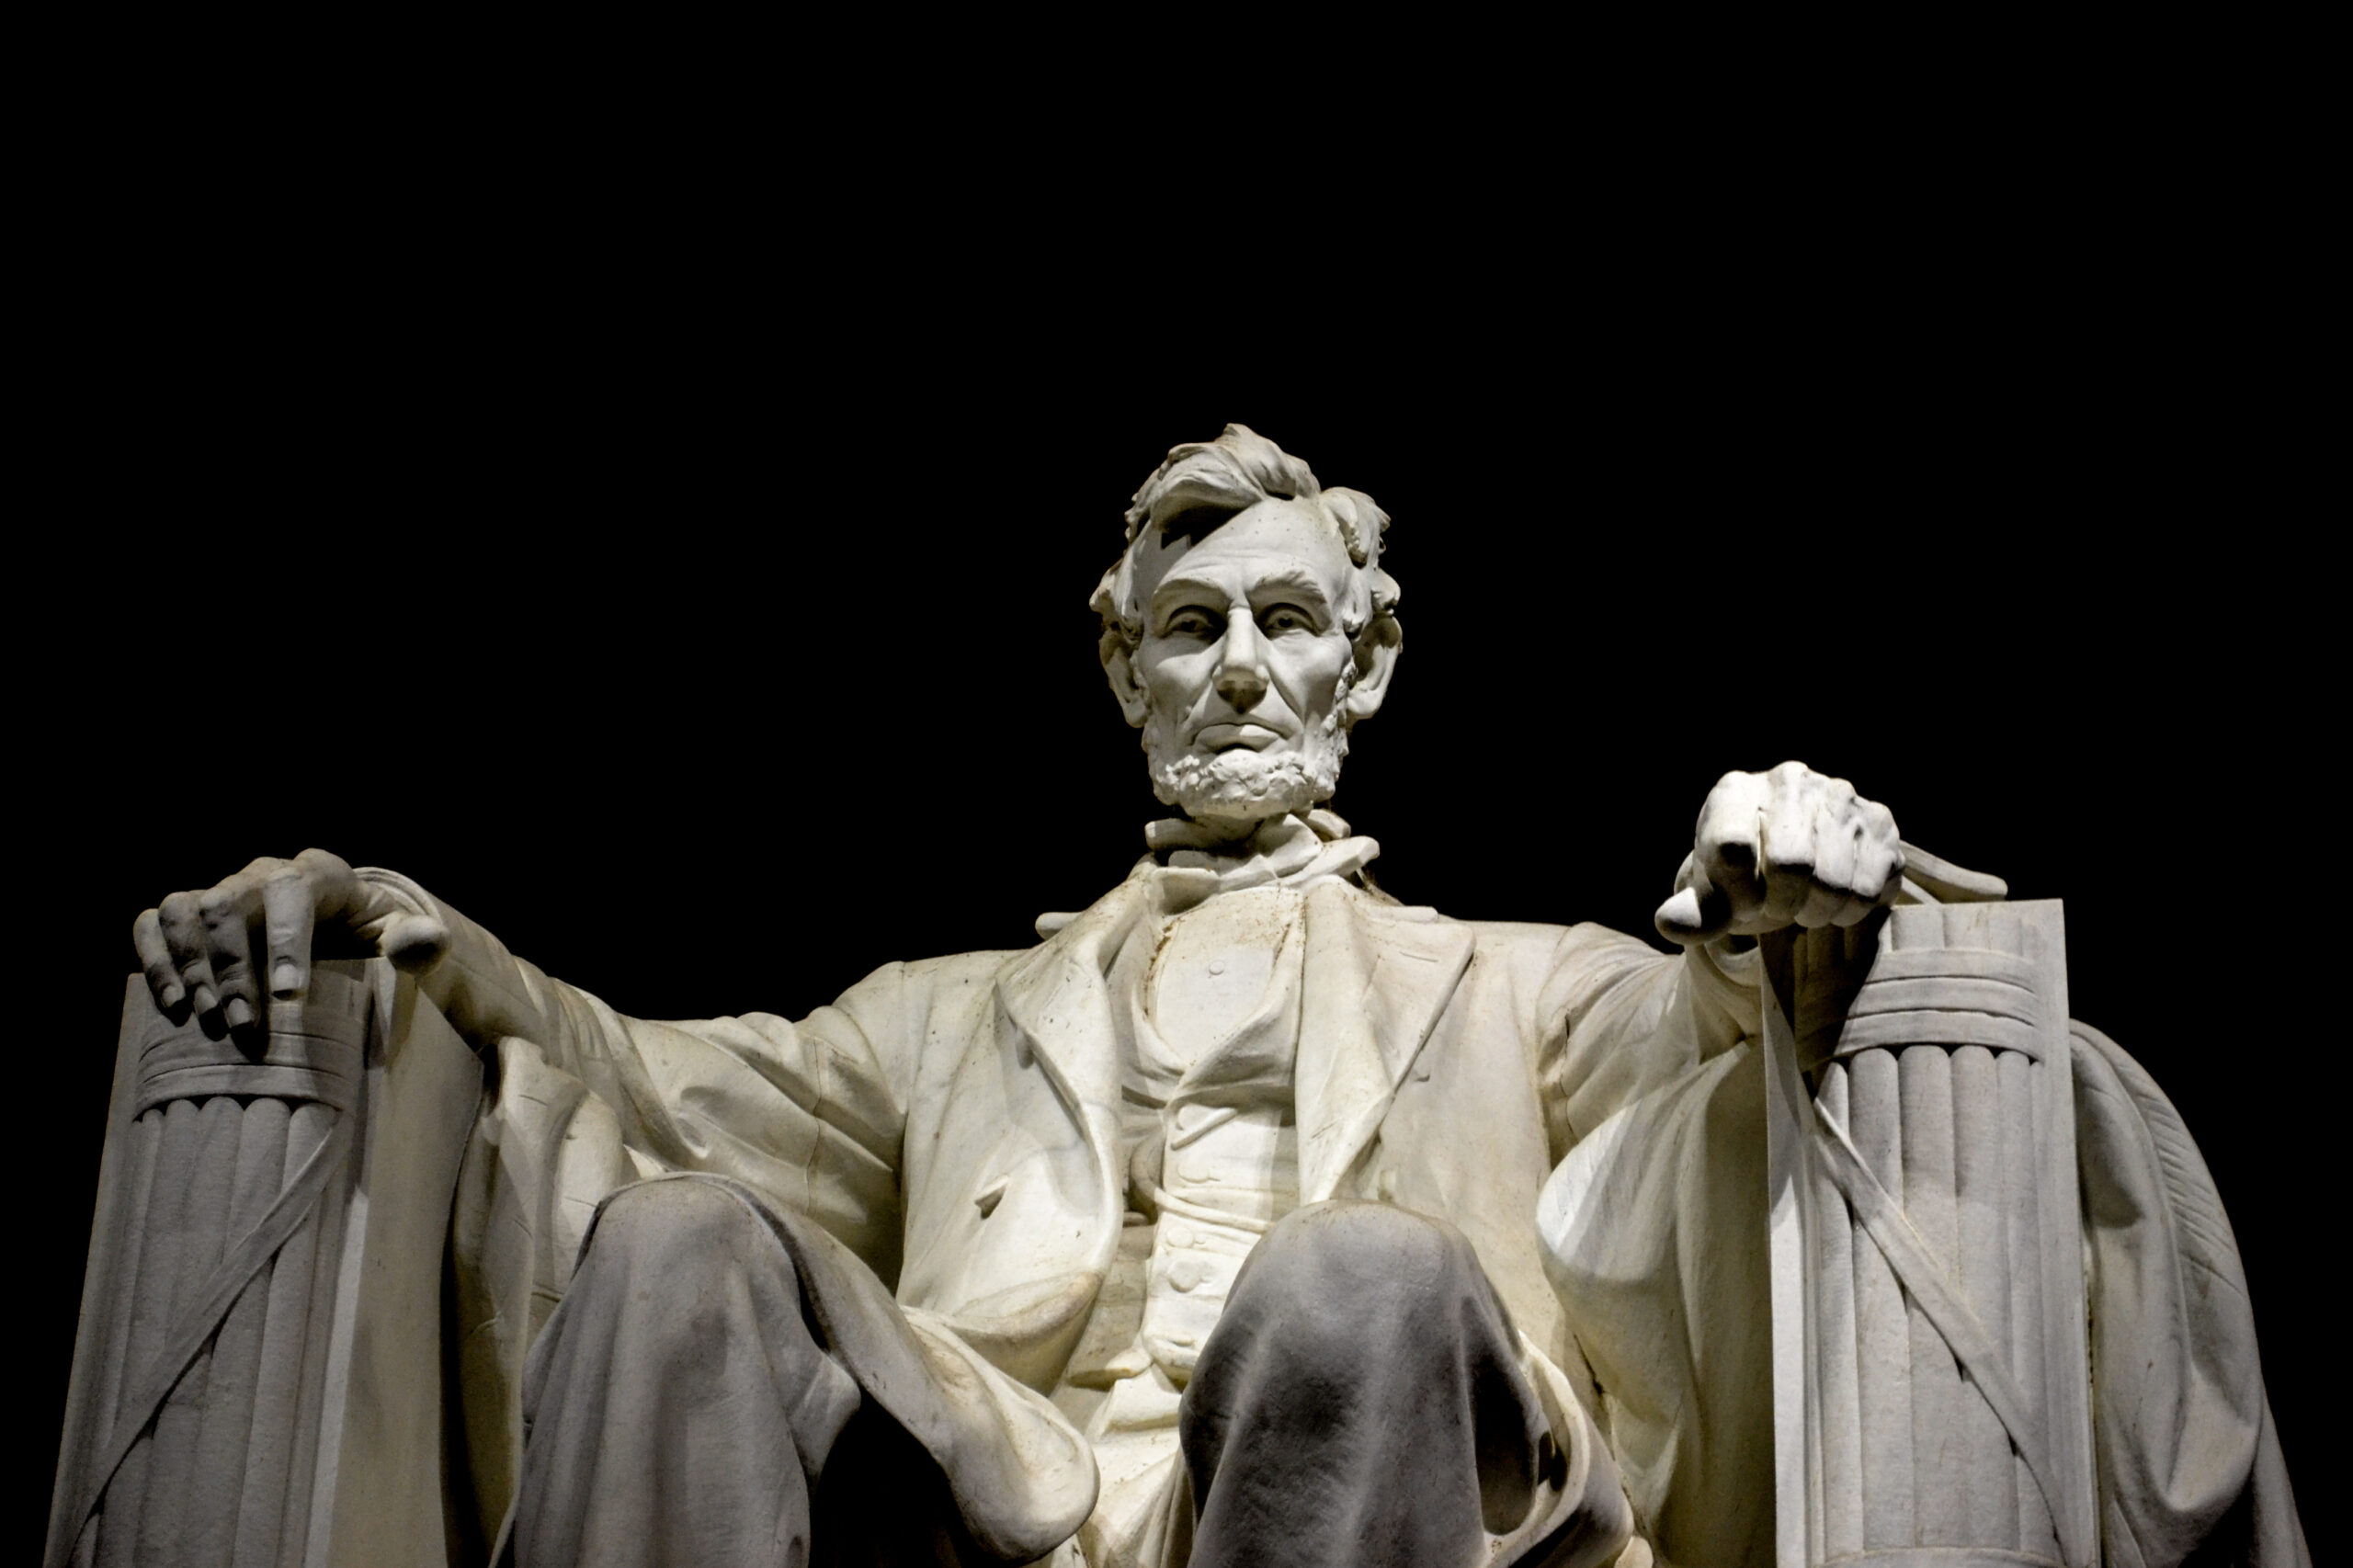 Abraham Lincoln Memorial in Washington, D.C.